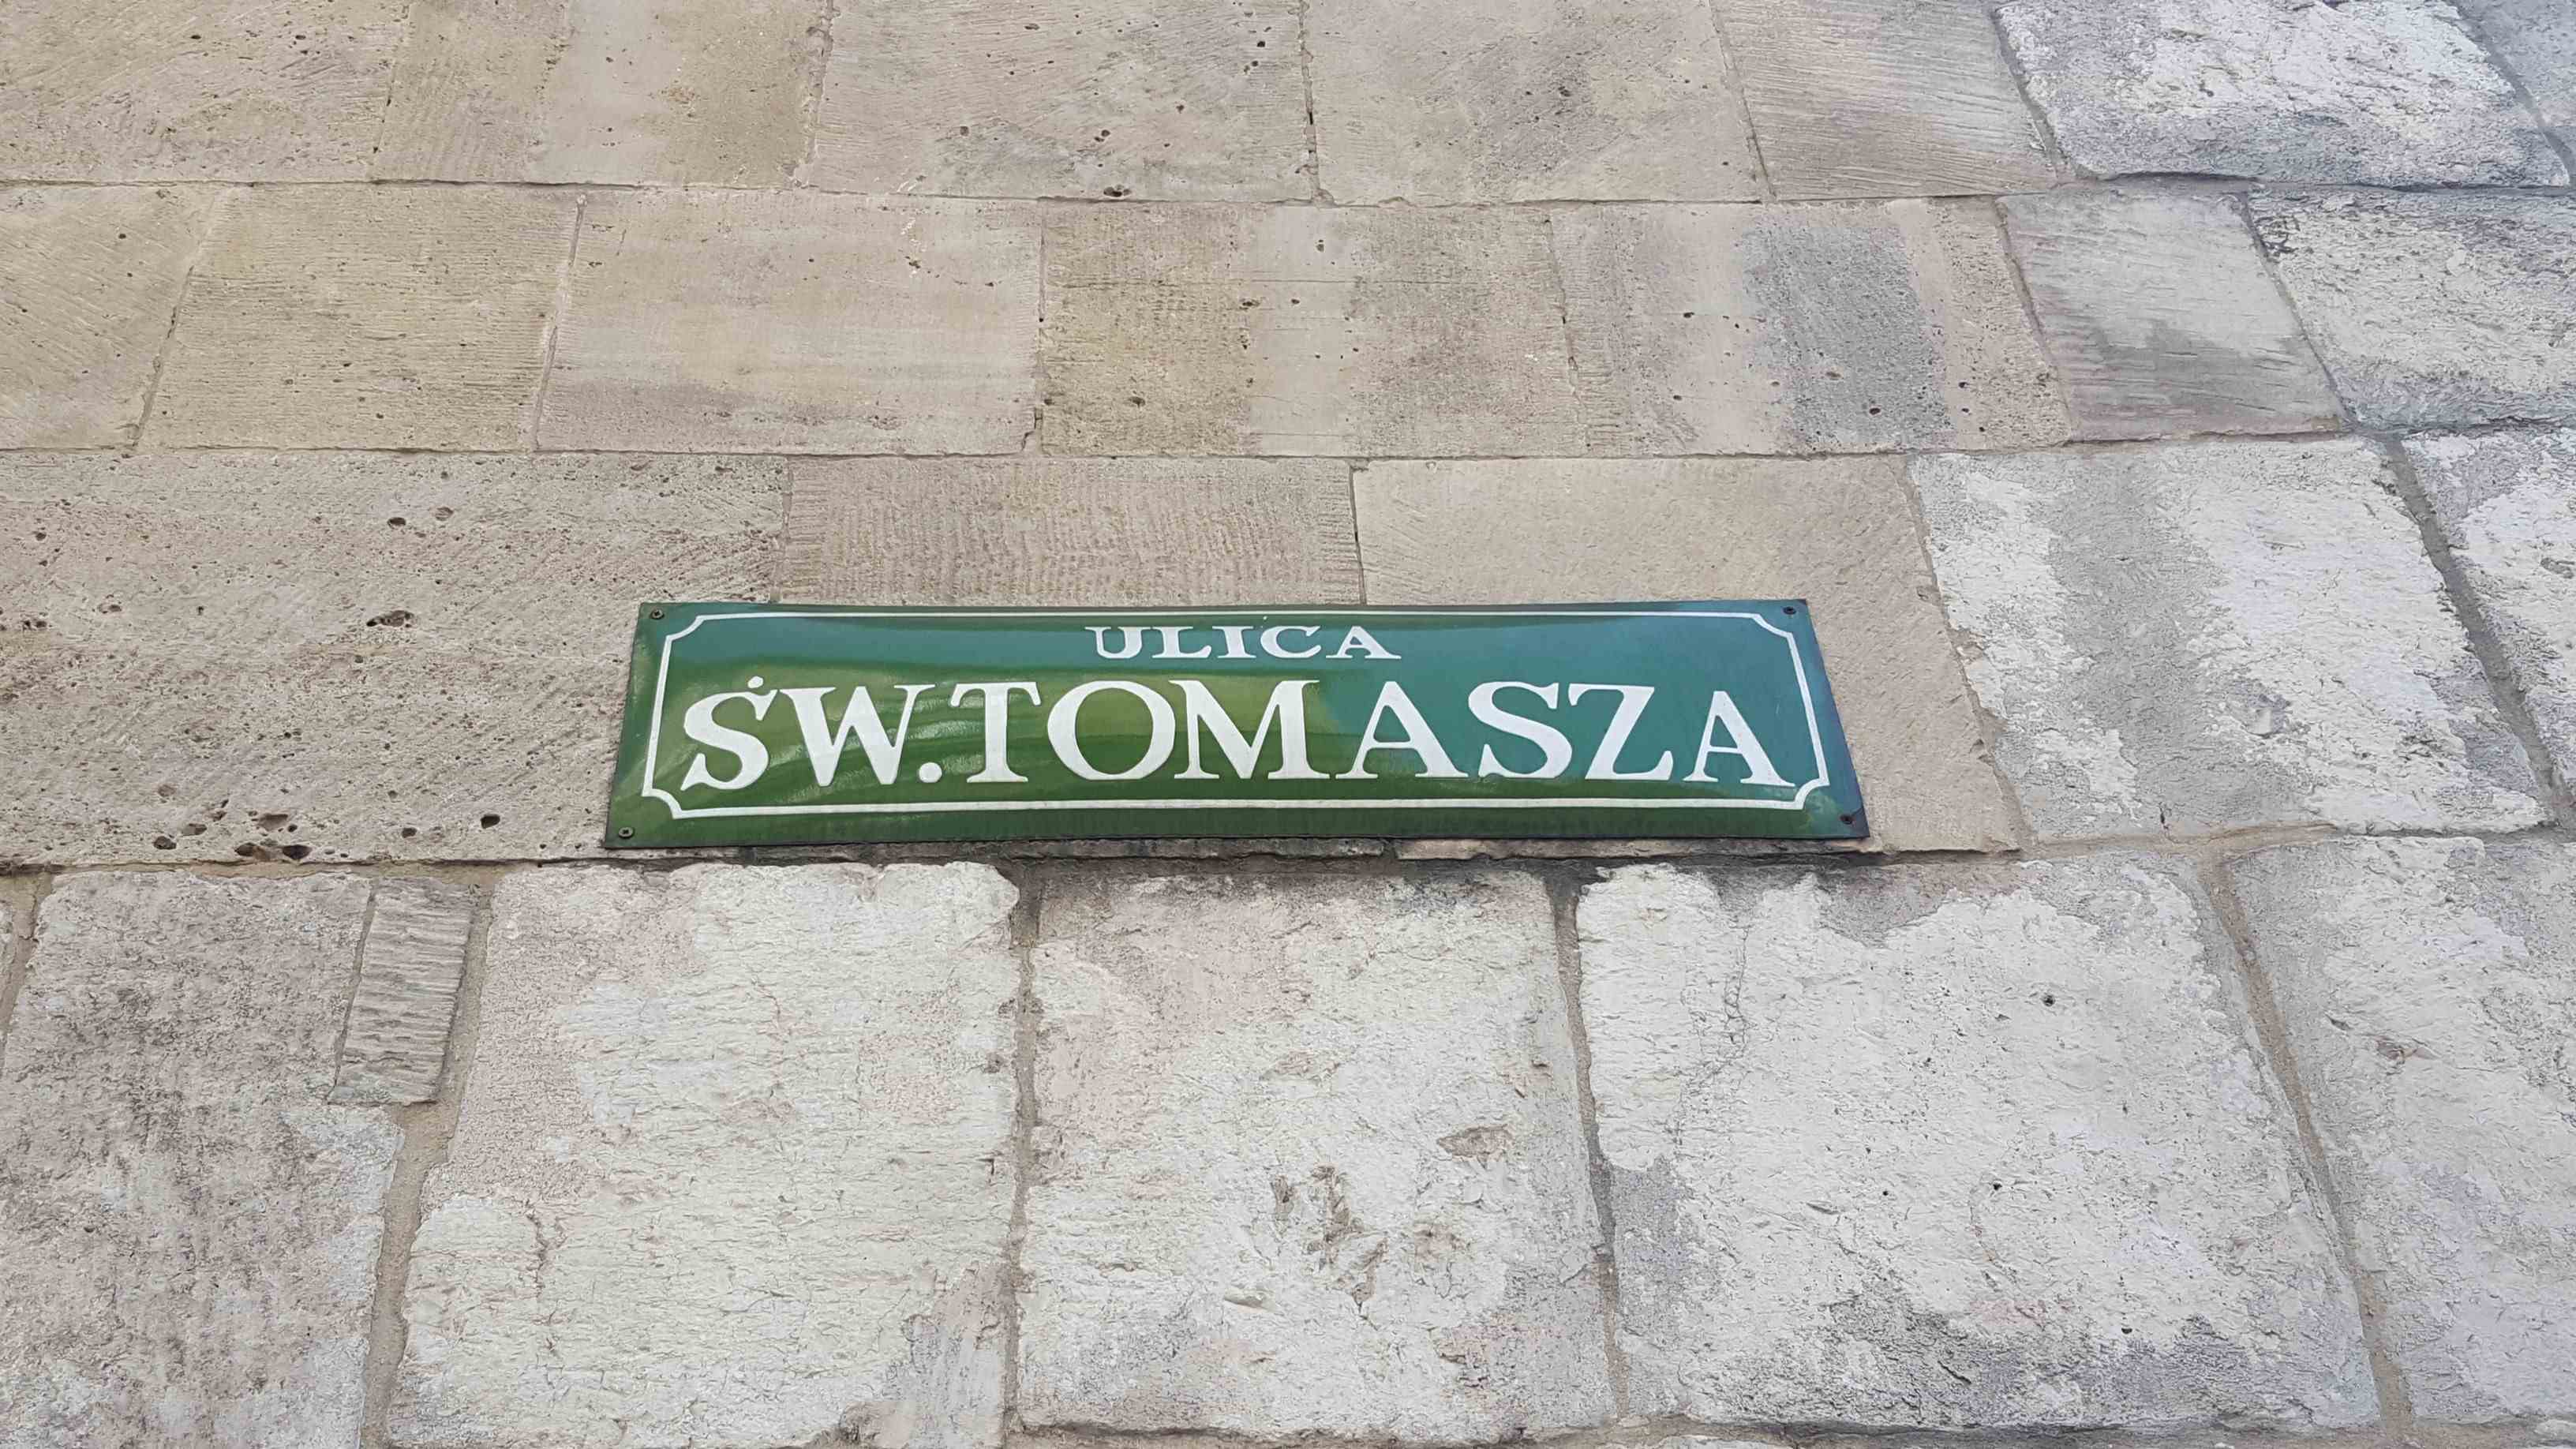 Tomasza 25 - street sign